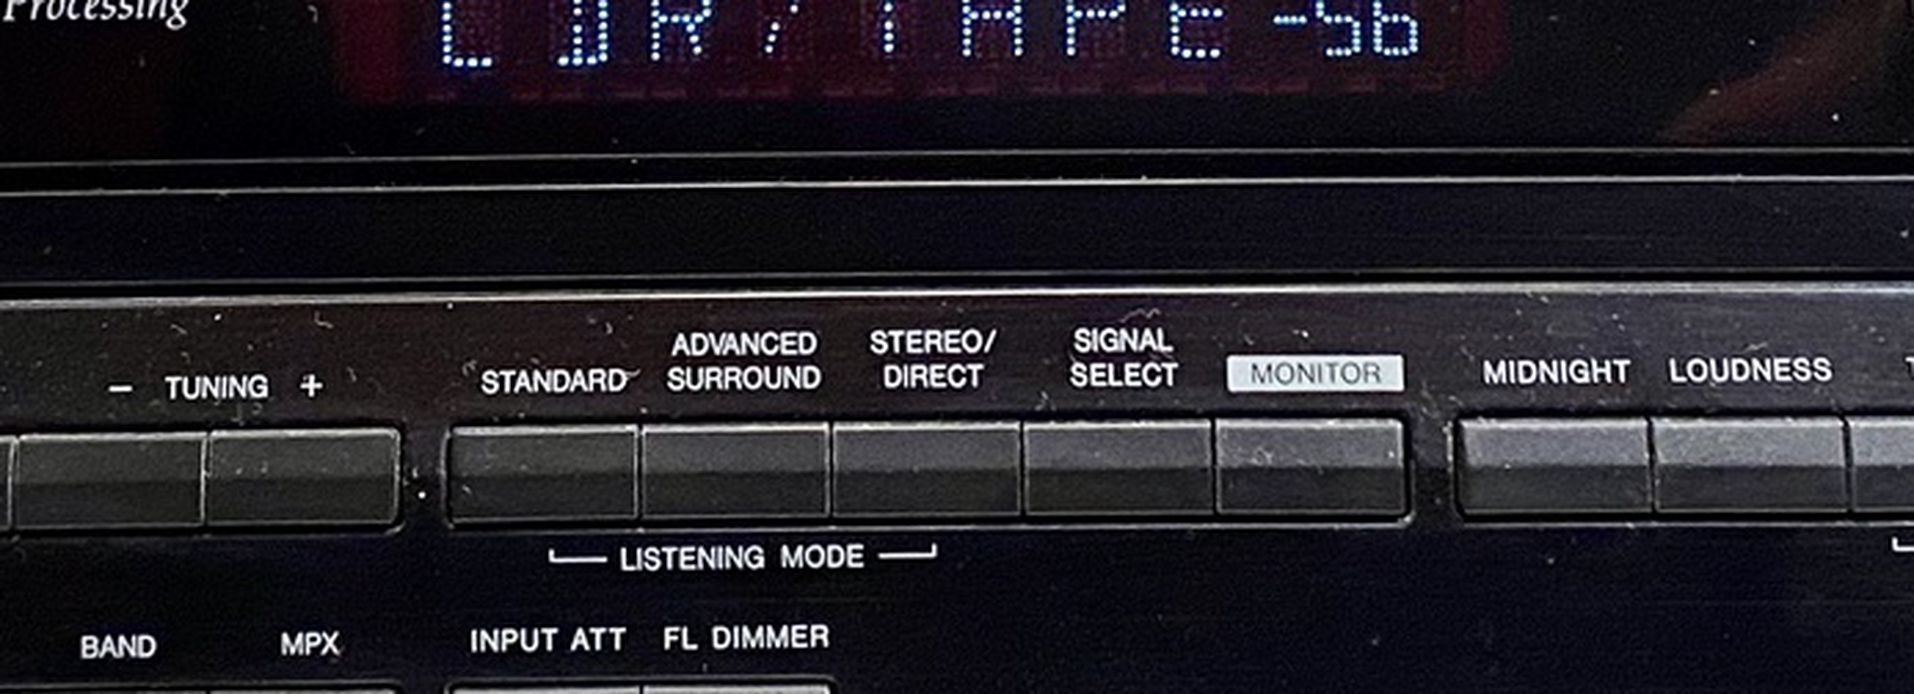 Pioneer VSX-D411 260W Dolby Digital Pro Logic II 5.1 Surround Sound A/V Receiver DTS